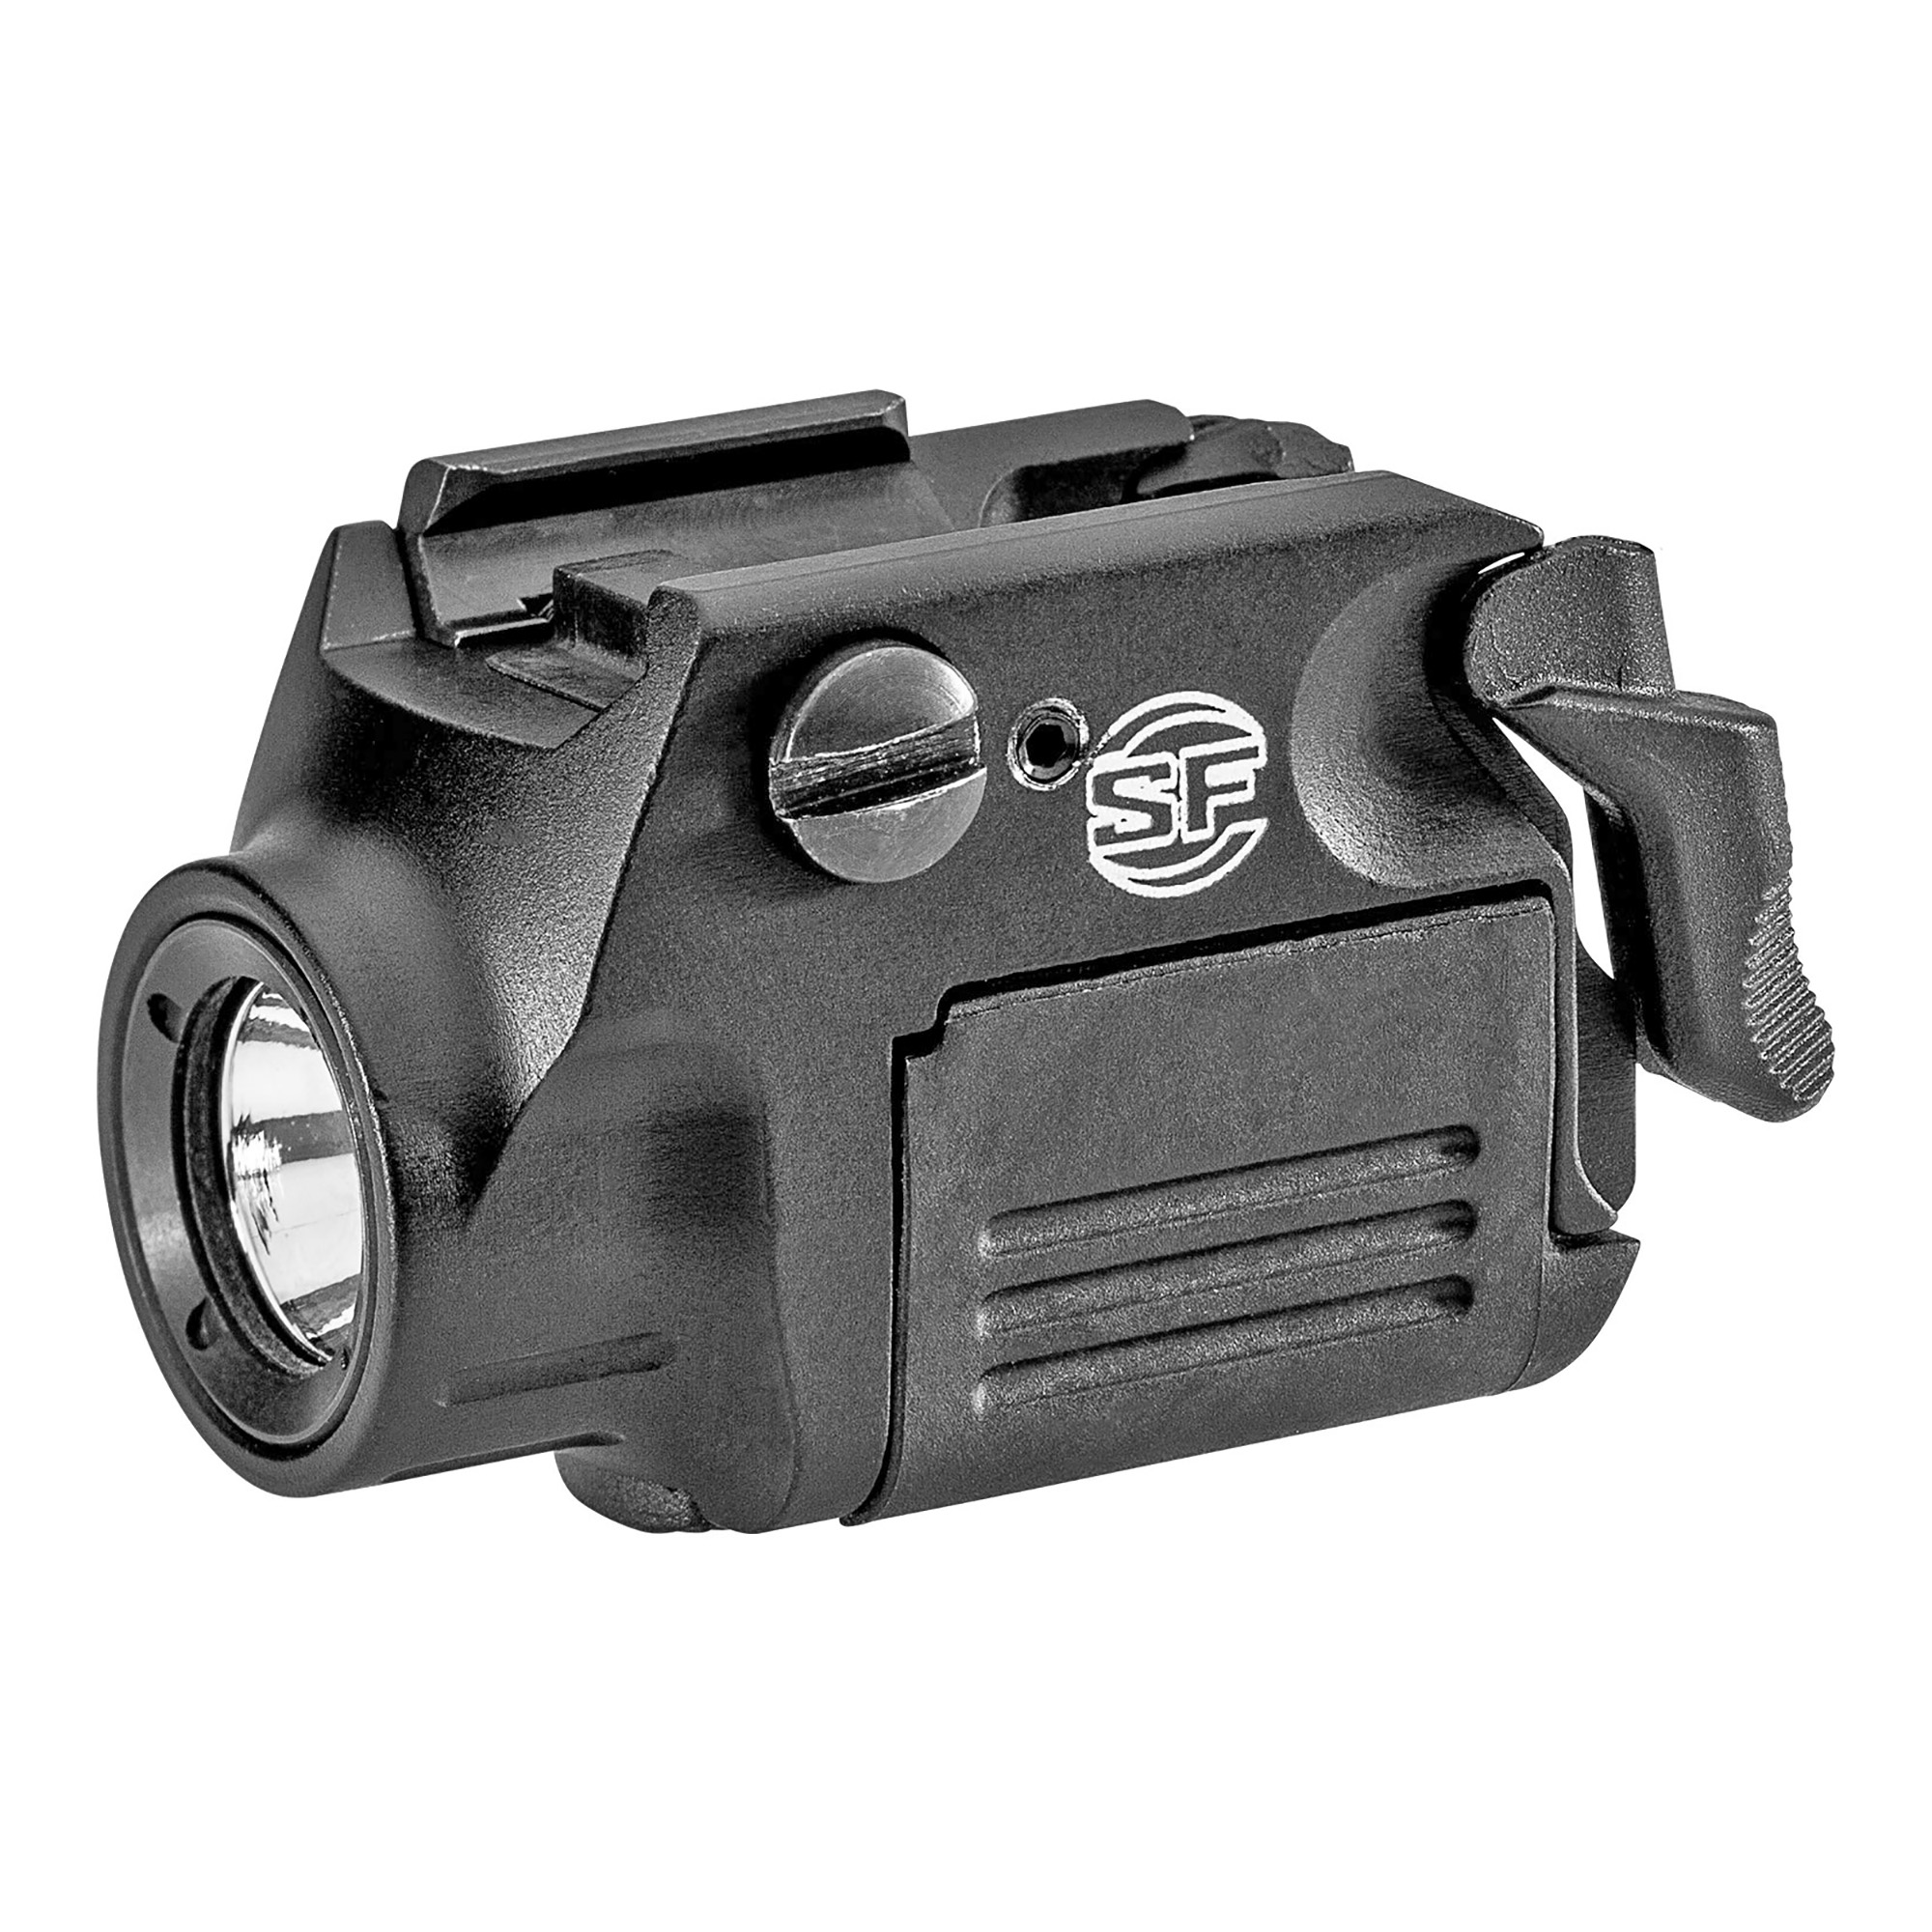 https://cityarsenal.com/product/surefire-xsc-a-micro-compact-handgun-light-for-glock-43x-48-350-lumens-black/